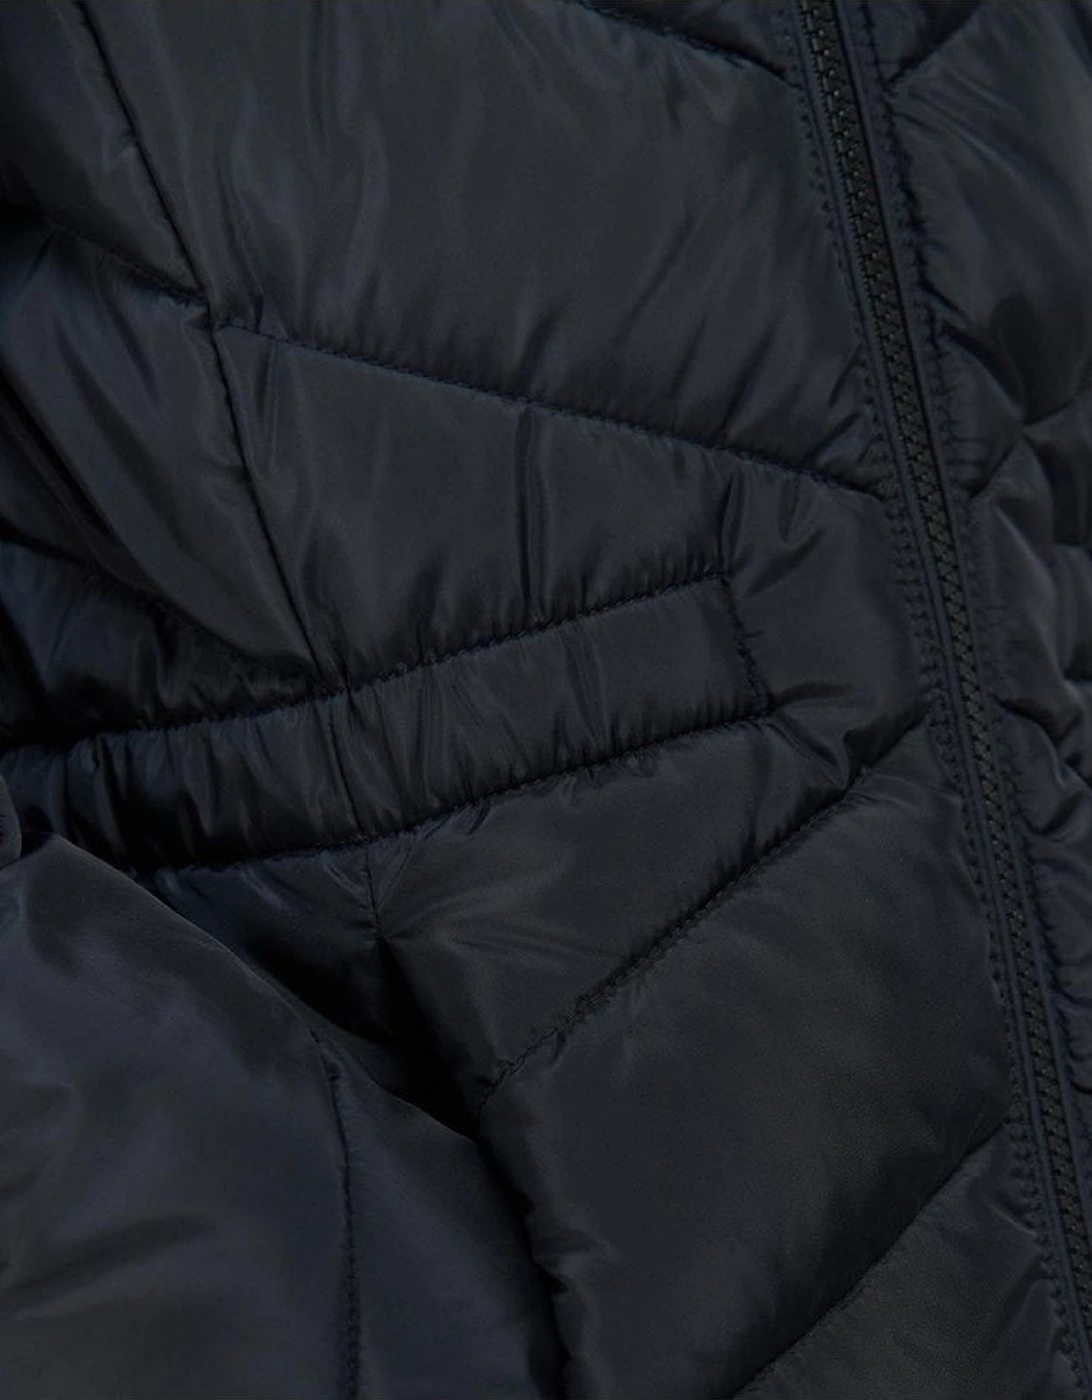 Internatinal girl's Black Julio Quilted Jacket